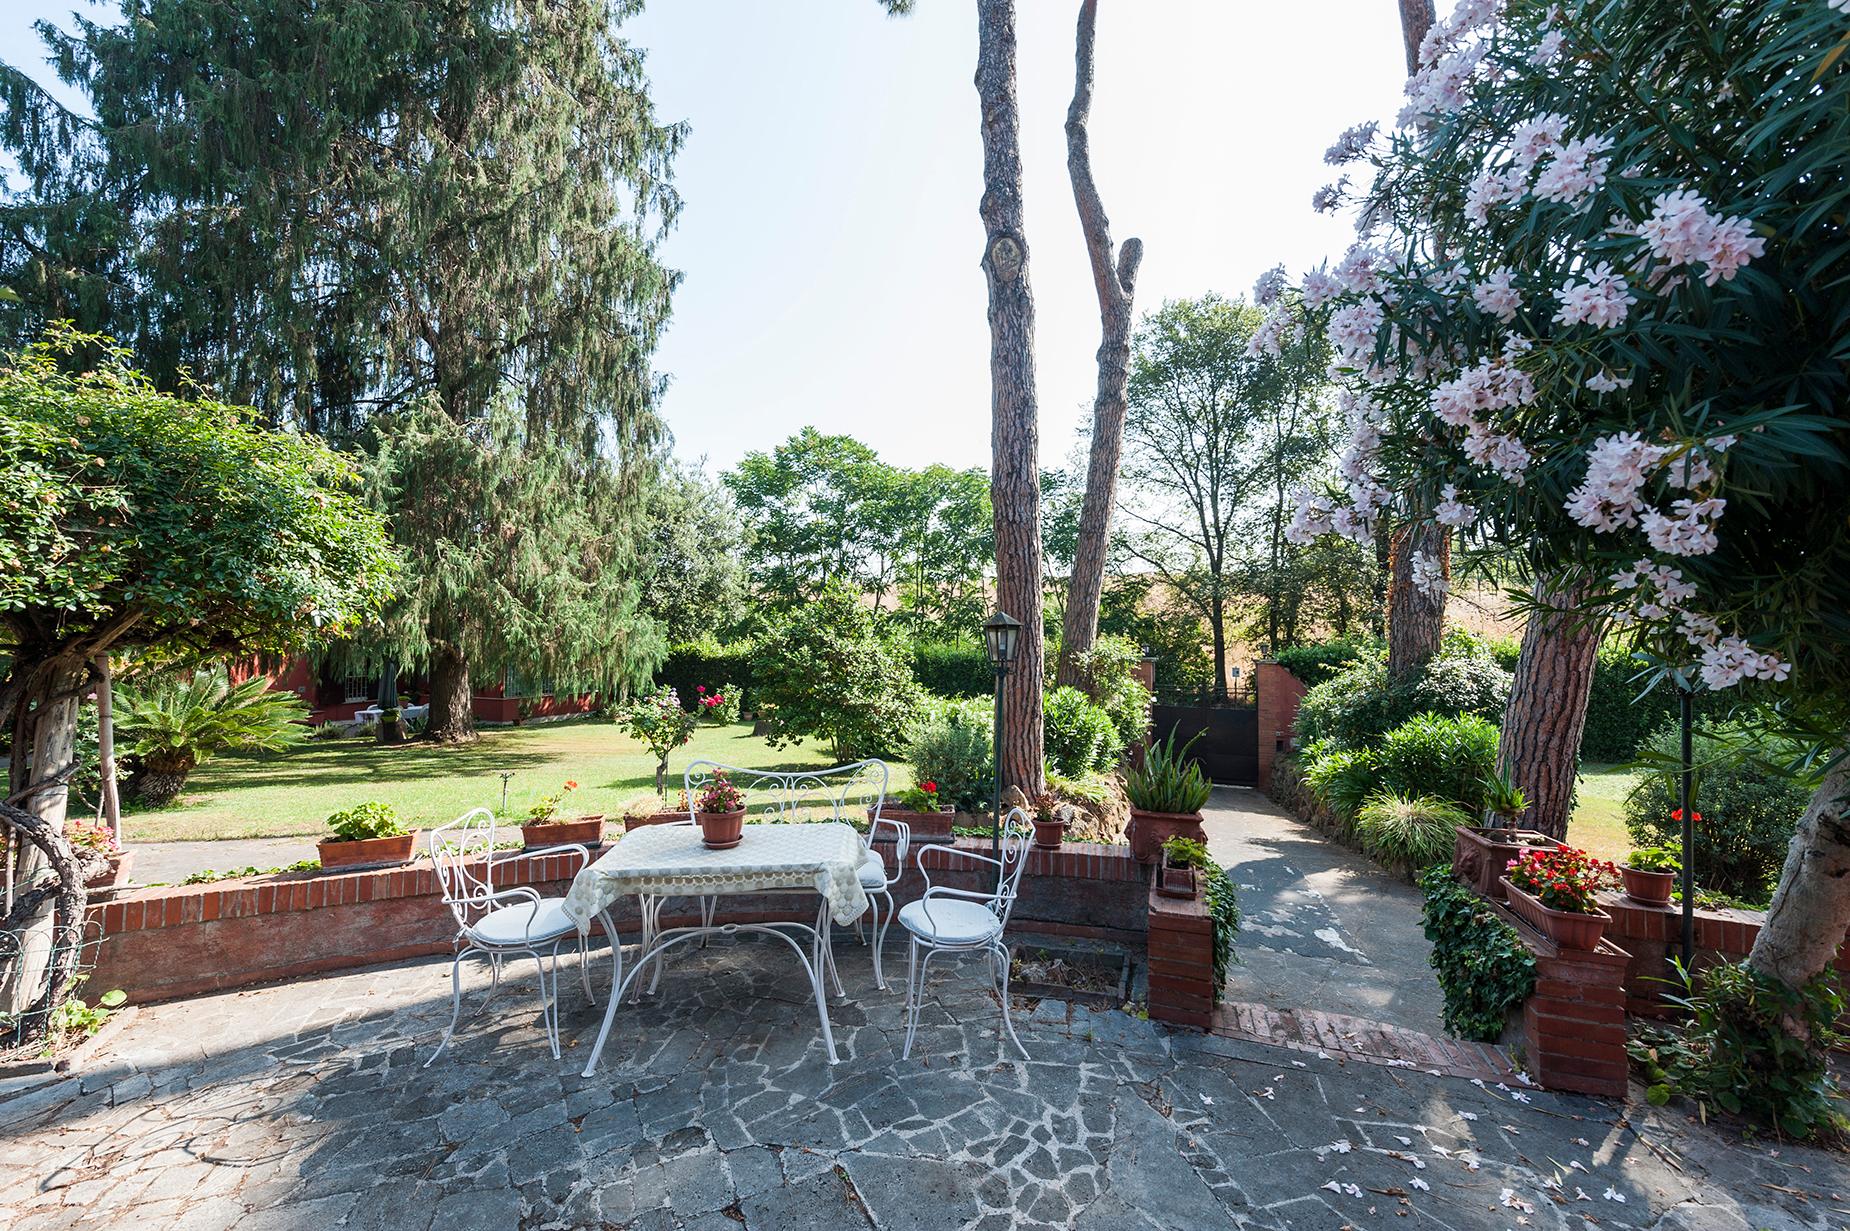                                                     Beautiful villa with large garden near Via Appia Antica                                                     - 4